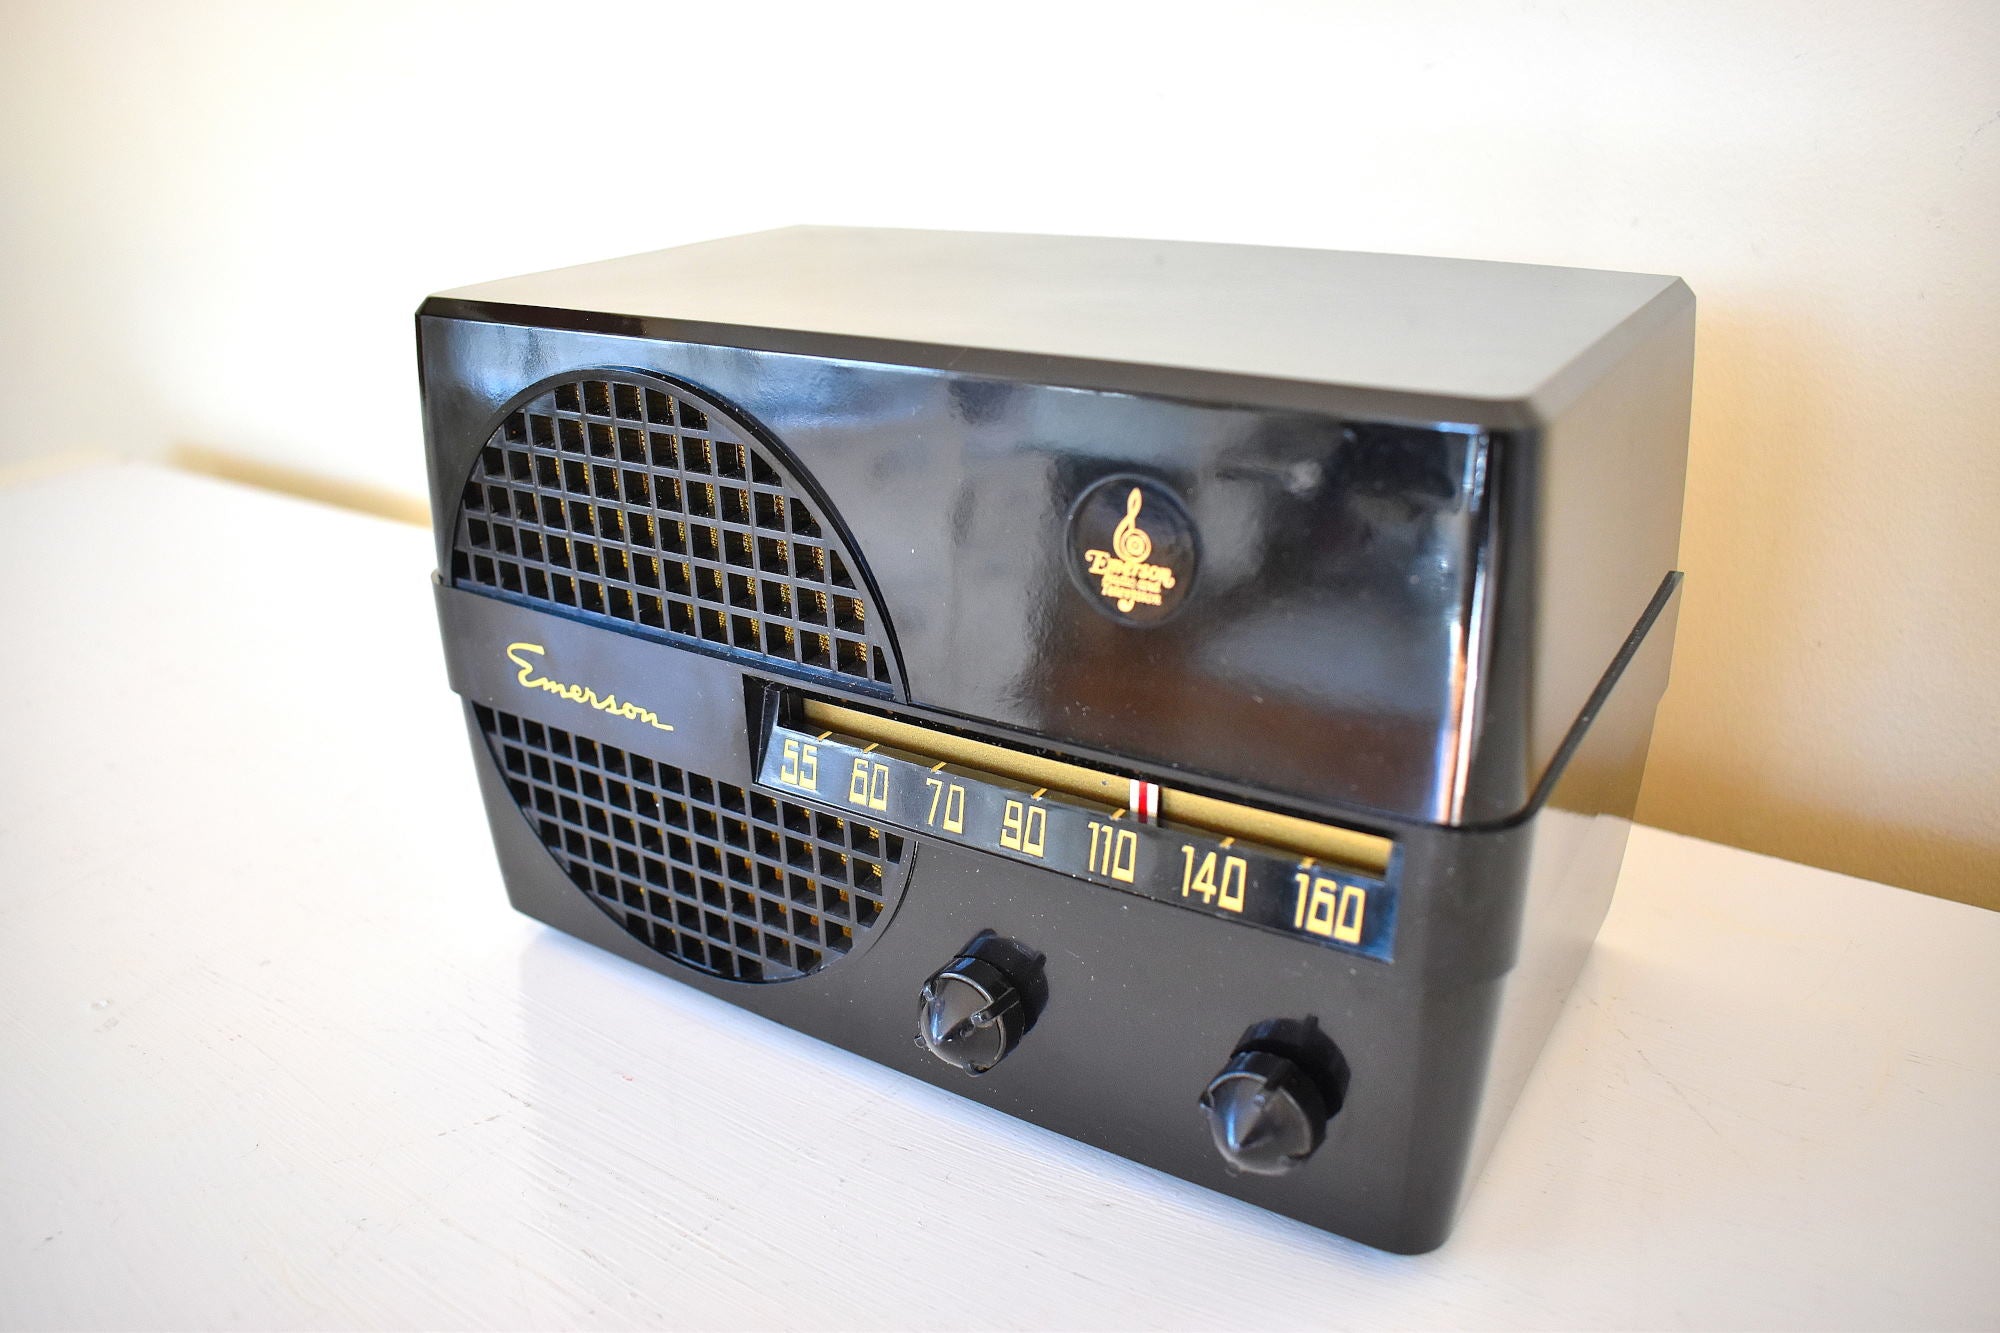 Bluetooth Ready To Go - Hematite Black 1952 Emerson Model 652 Vacuum Tube AM Radio Sounds Great! Beautiful Black Bakelite!